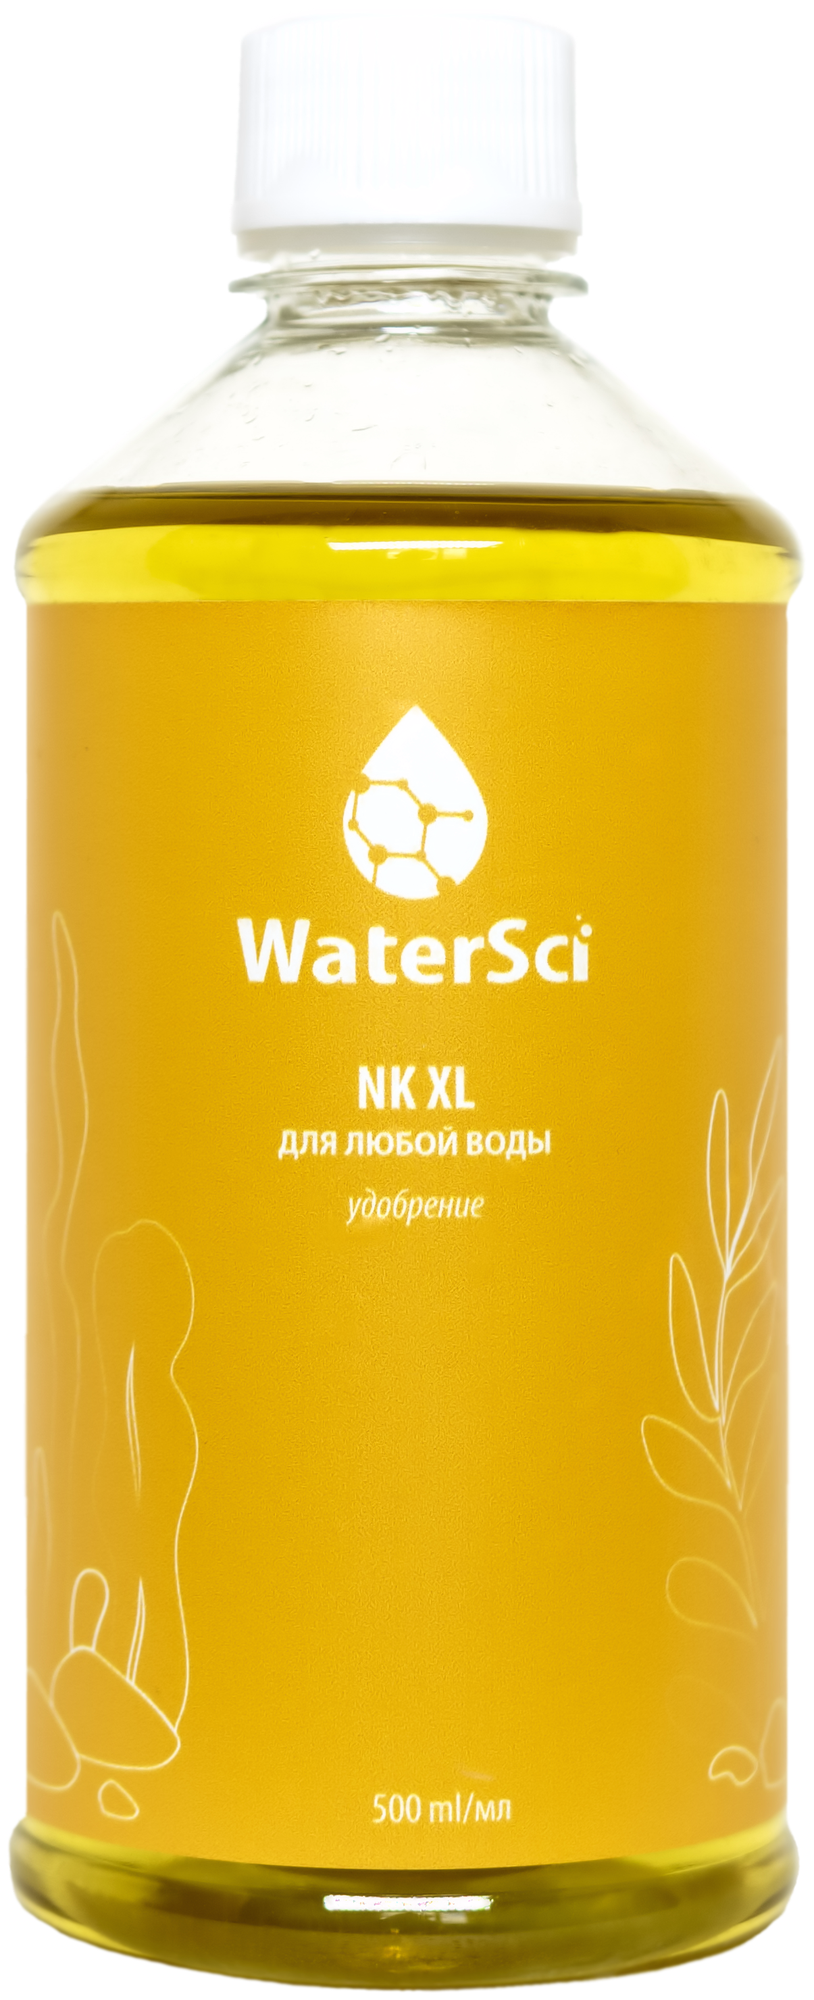 Азотно-калиевый концентрат Water Sci NK XL, 500мл